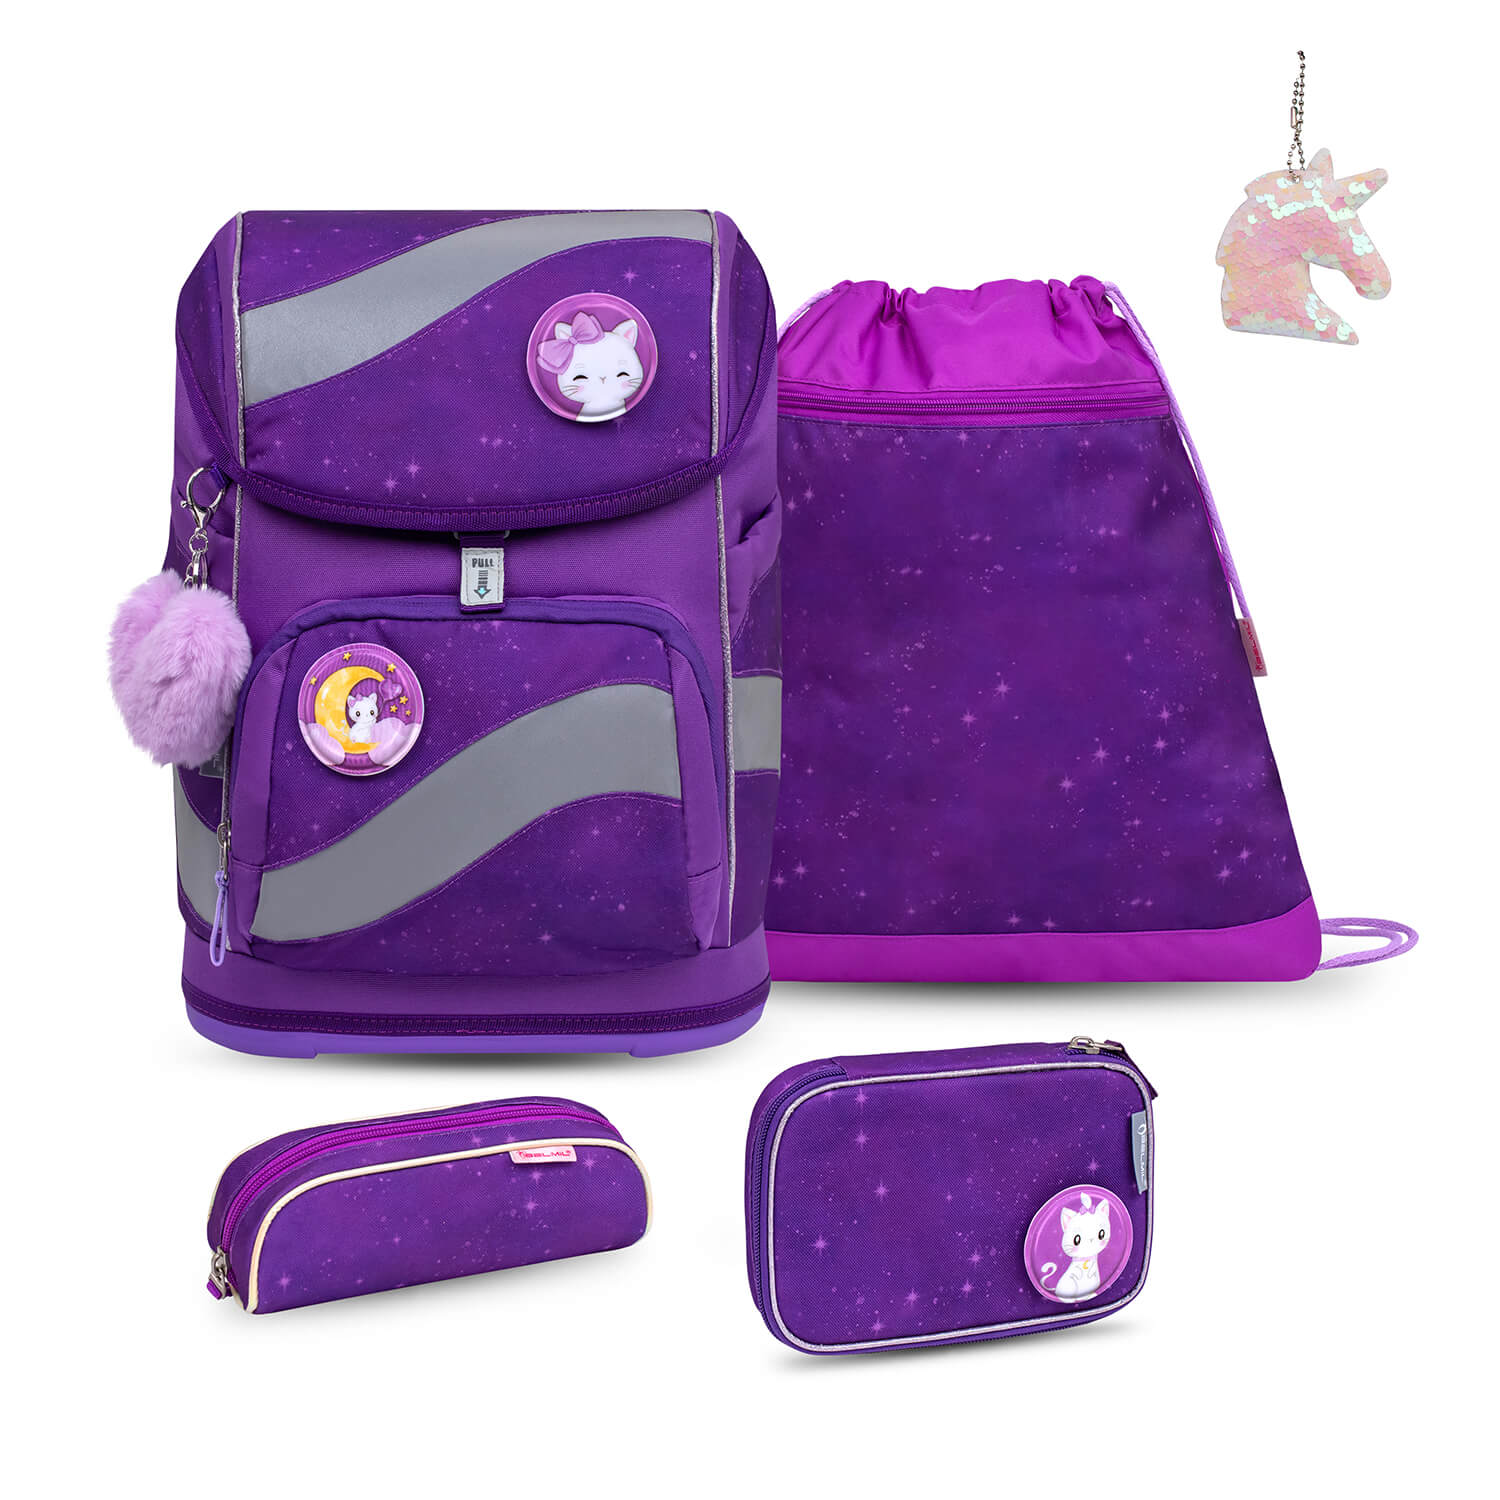 Smarty Purple Sky schoolbag set 6 pcs with GRATIS keychain